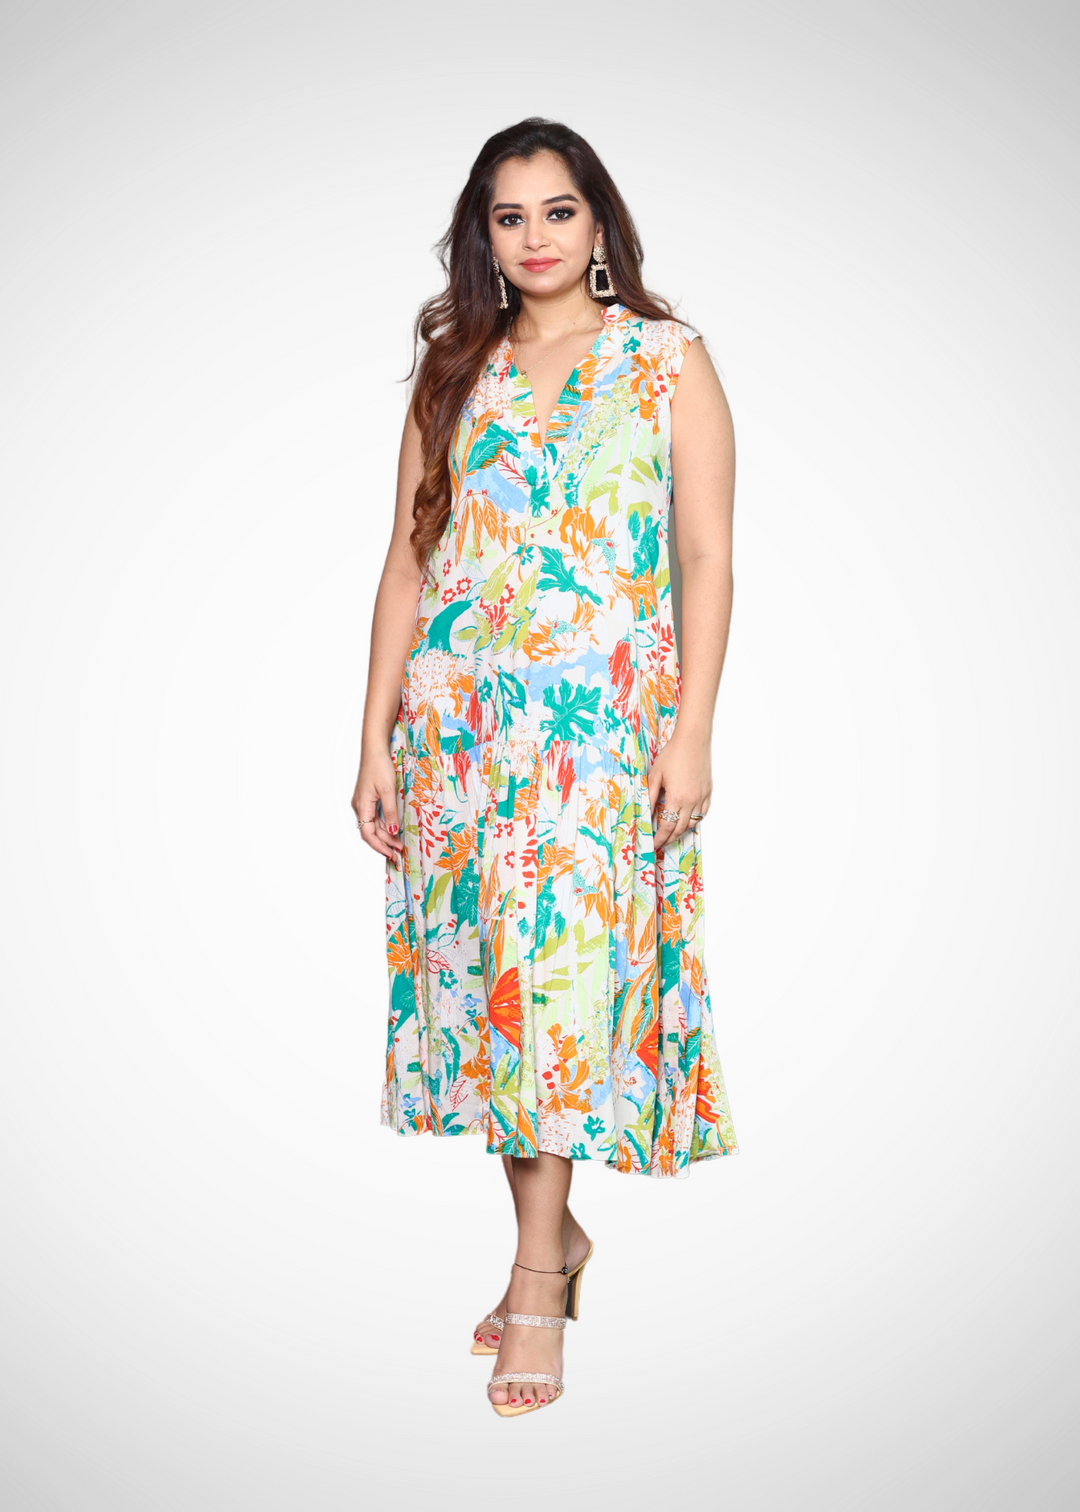 Alish Sleeveless Multi Color Summer Dress RMFH